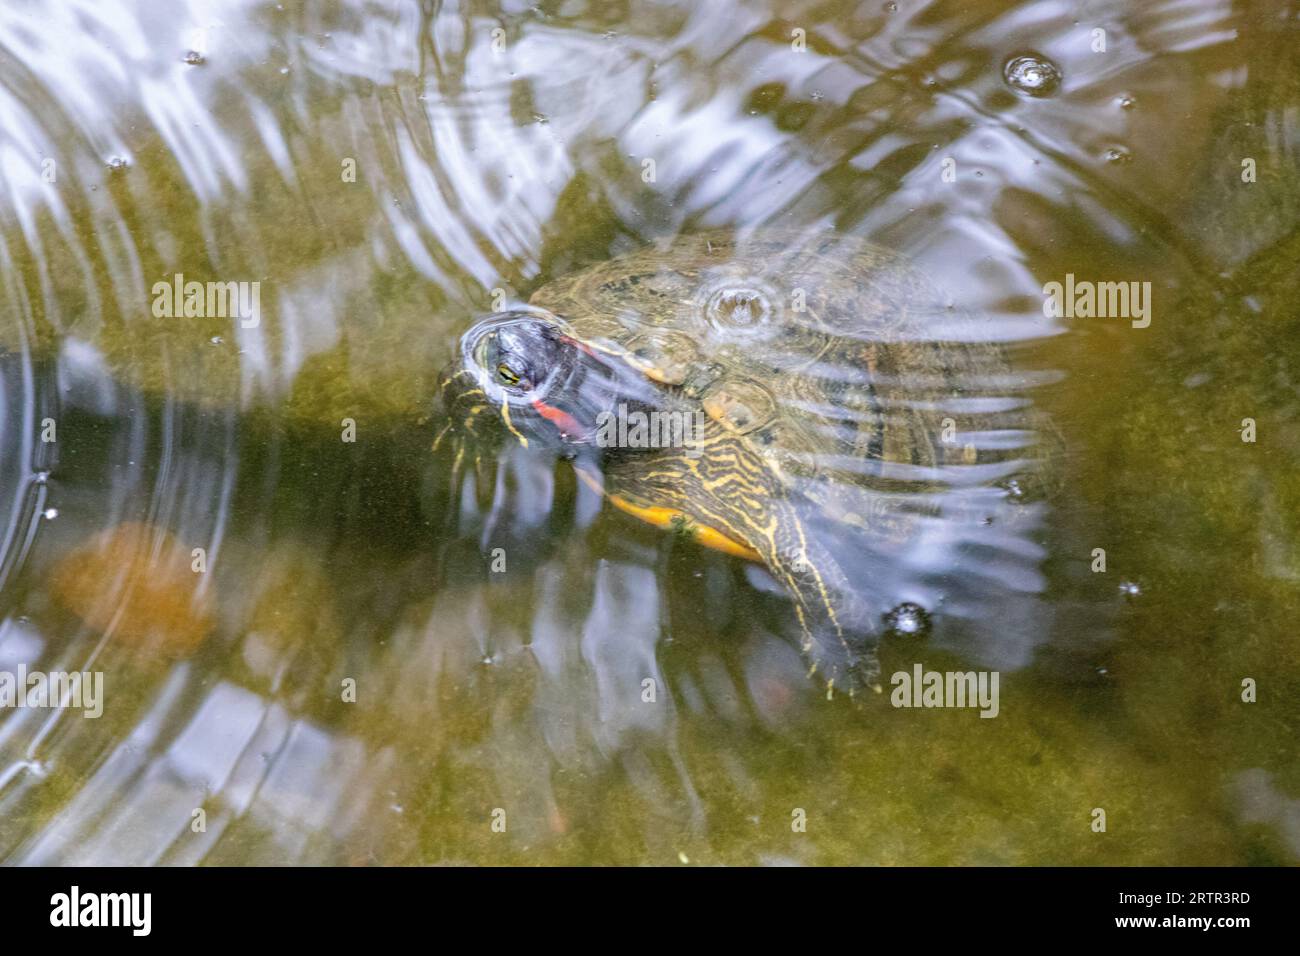 Turtles exhibit in water at Reptile Garden Tortuga Falls Rapid City South Dakota . High quality photo Stock Photo